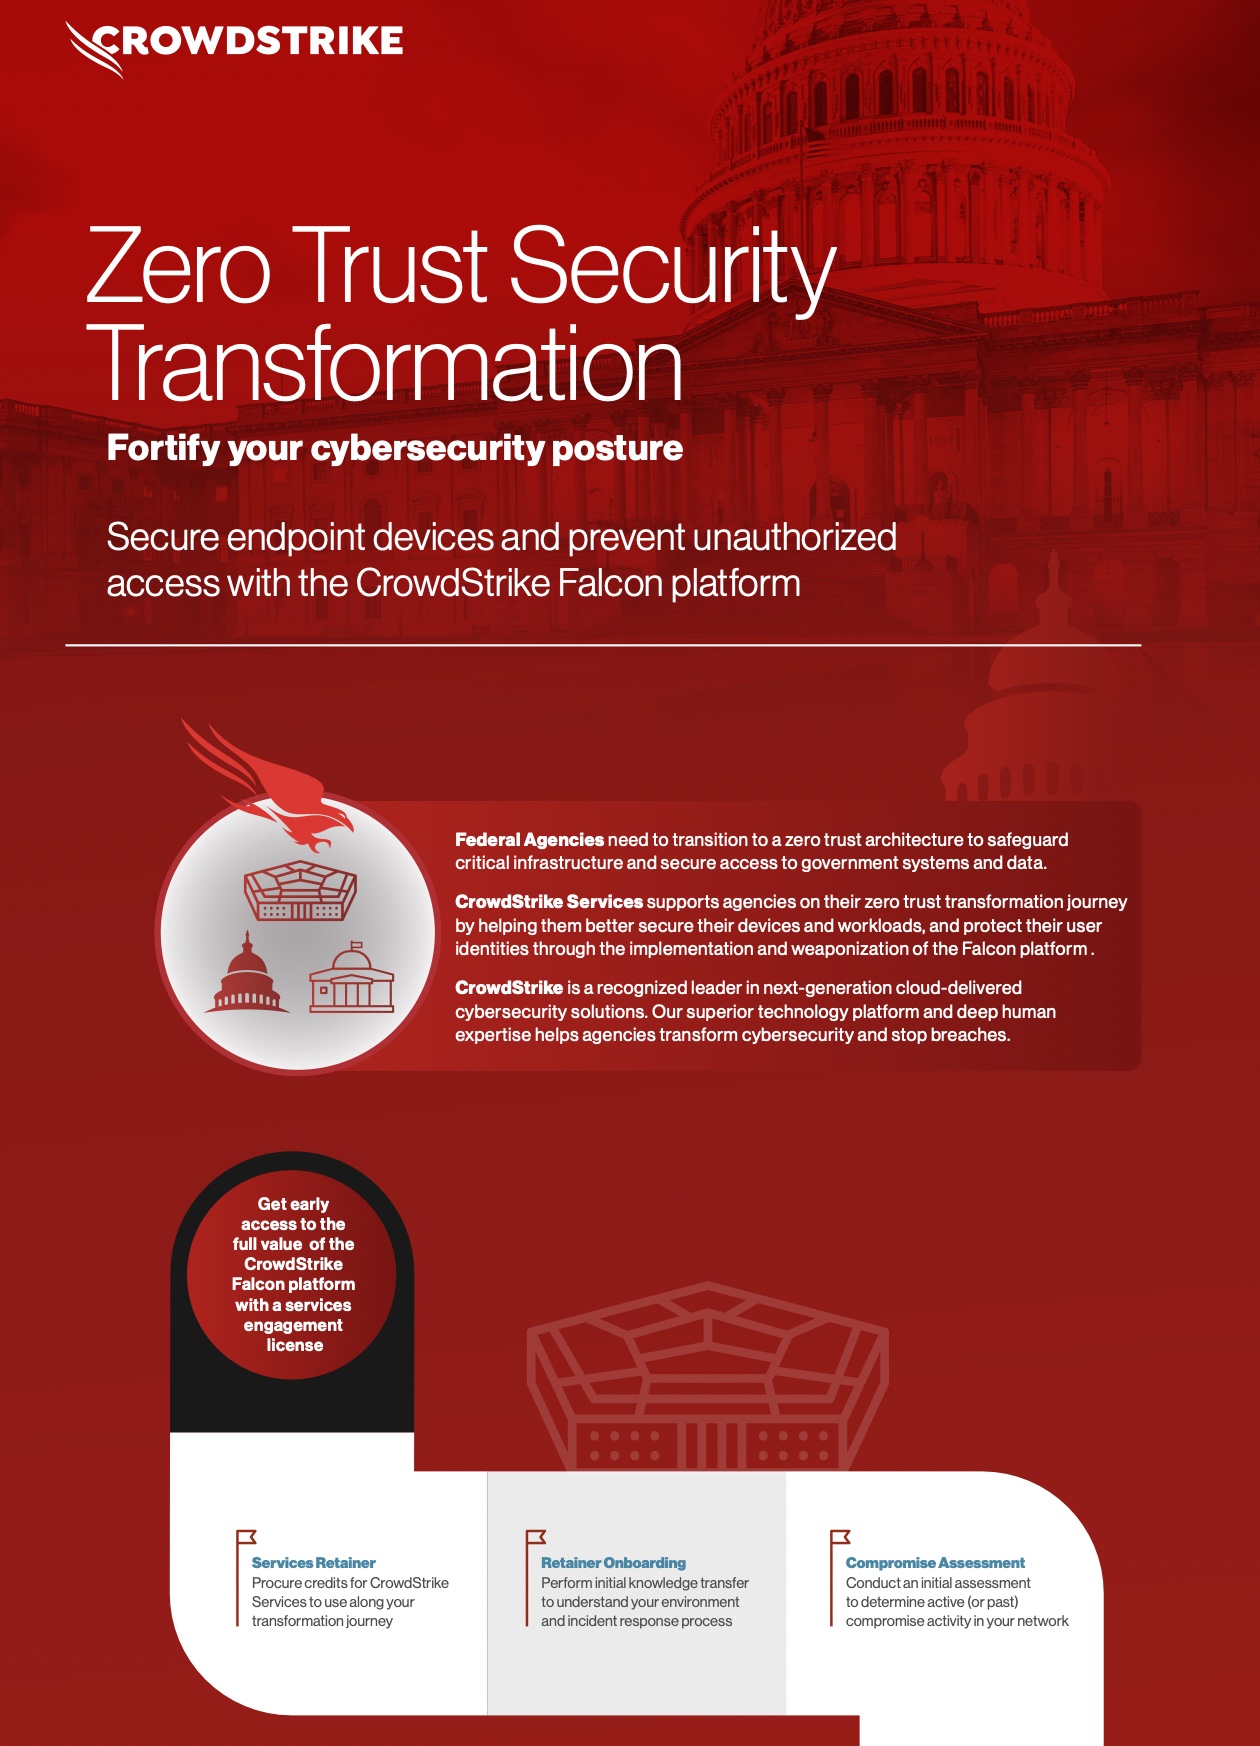 Zero Trust Security Transformation for Federal Agencies CrowdStrike